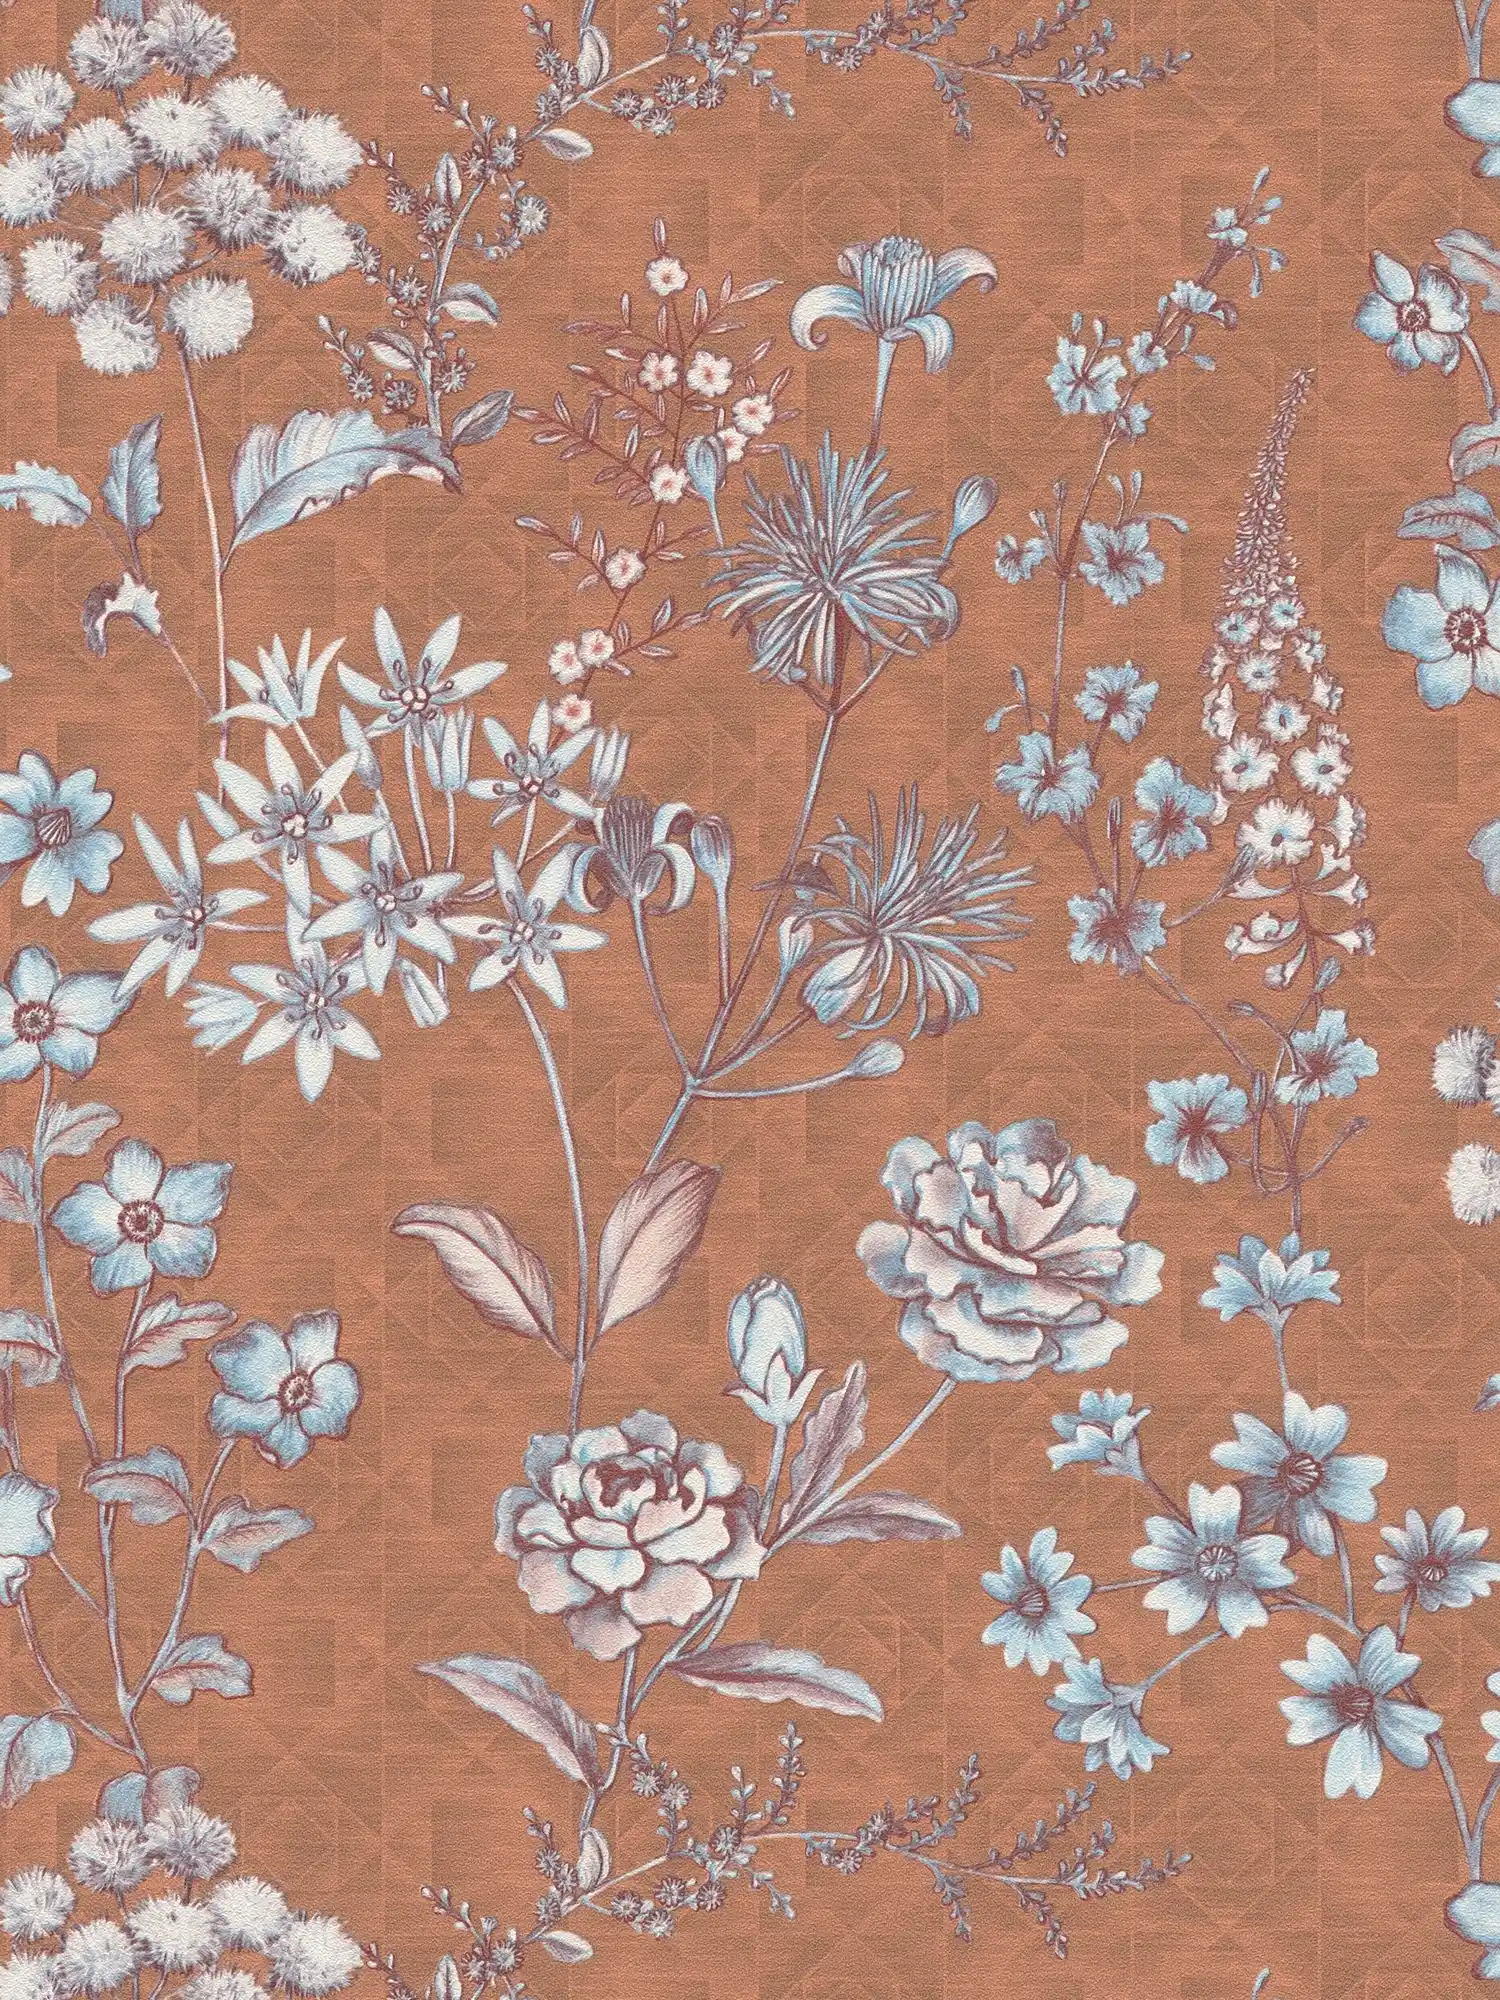 Vintage Blumentapete mit floralem Muster – Orange, Braun, Hellblau
